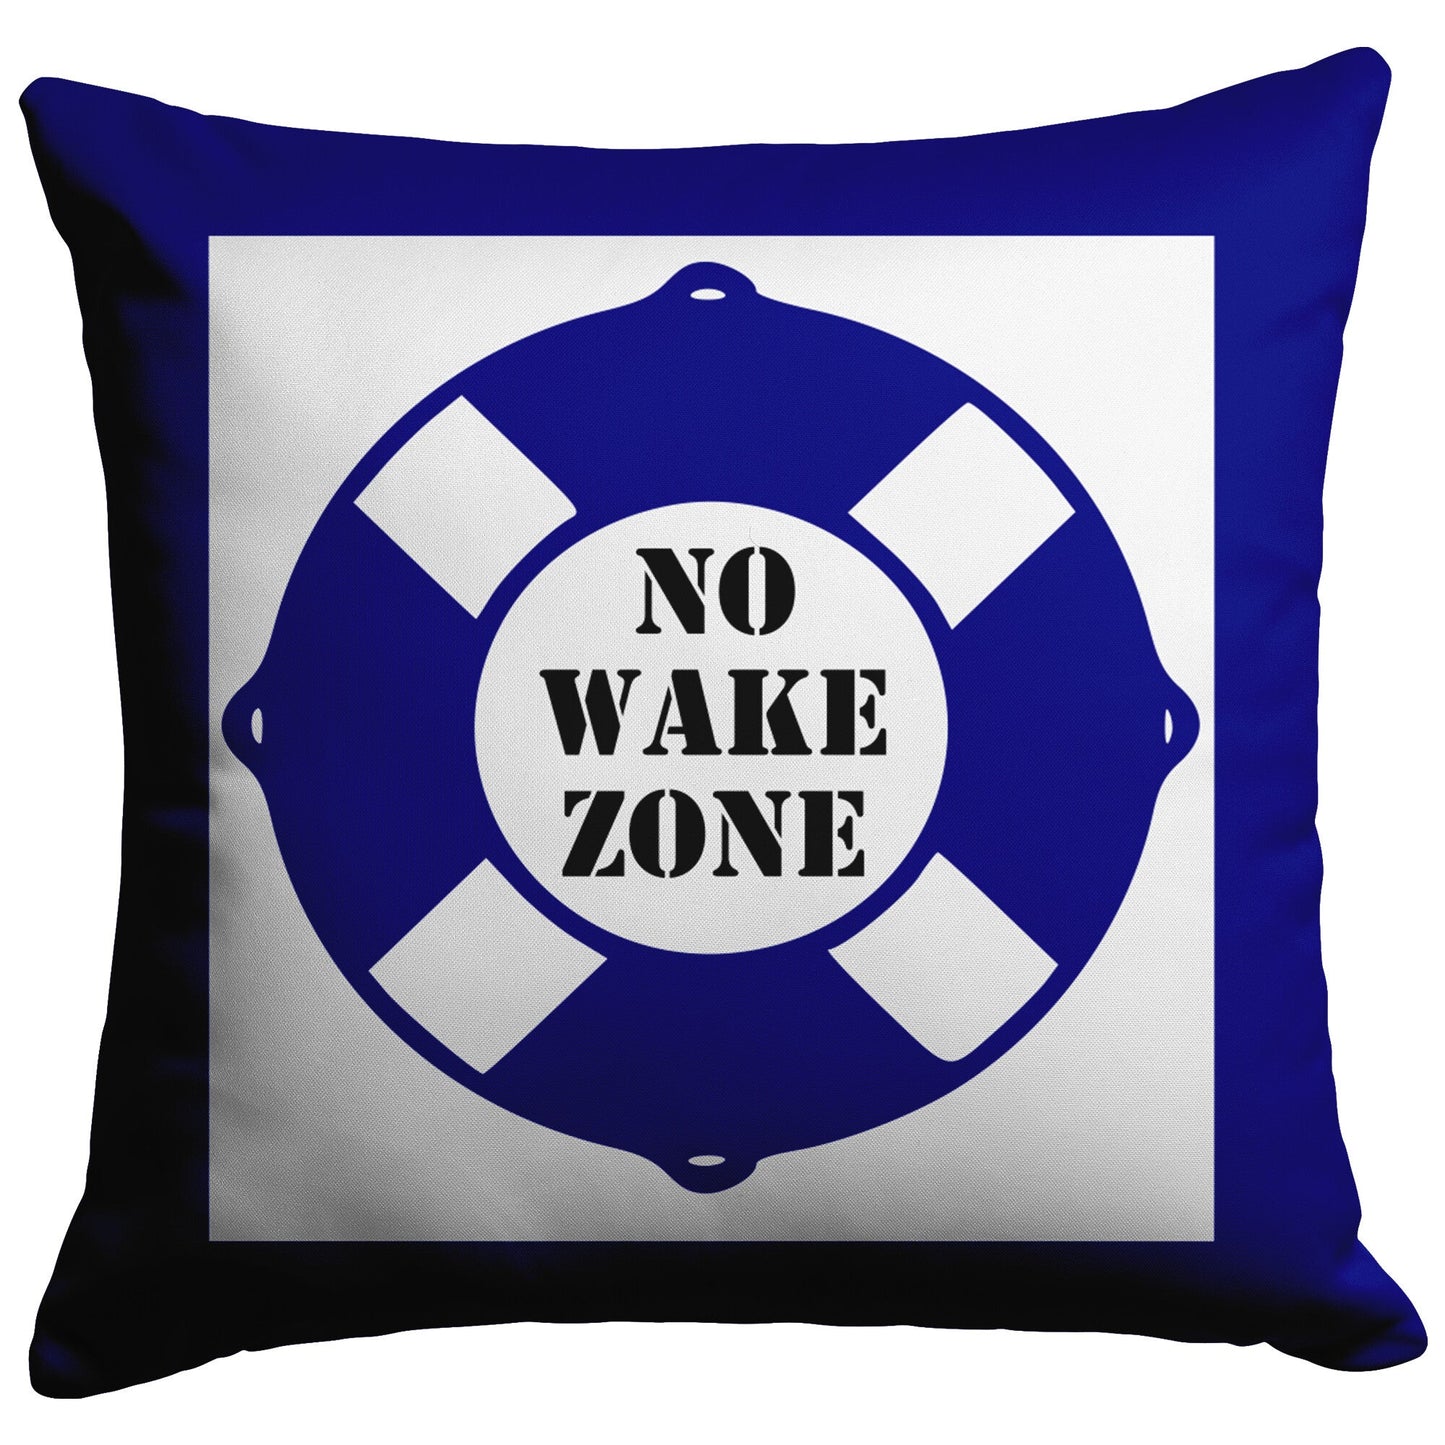 No wake zone blue